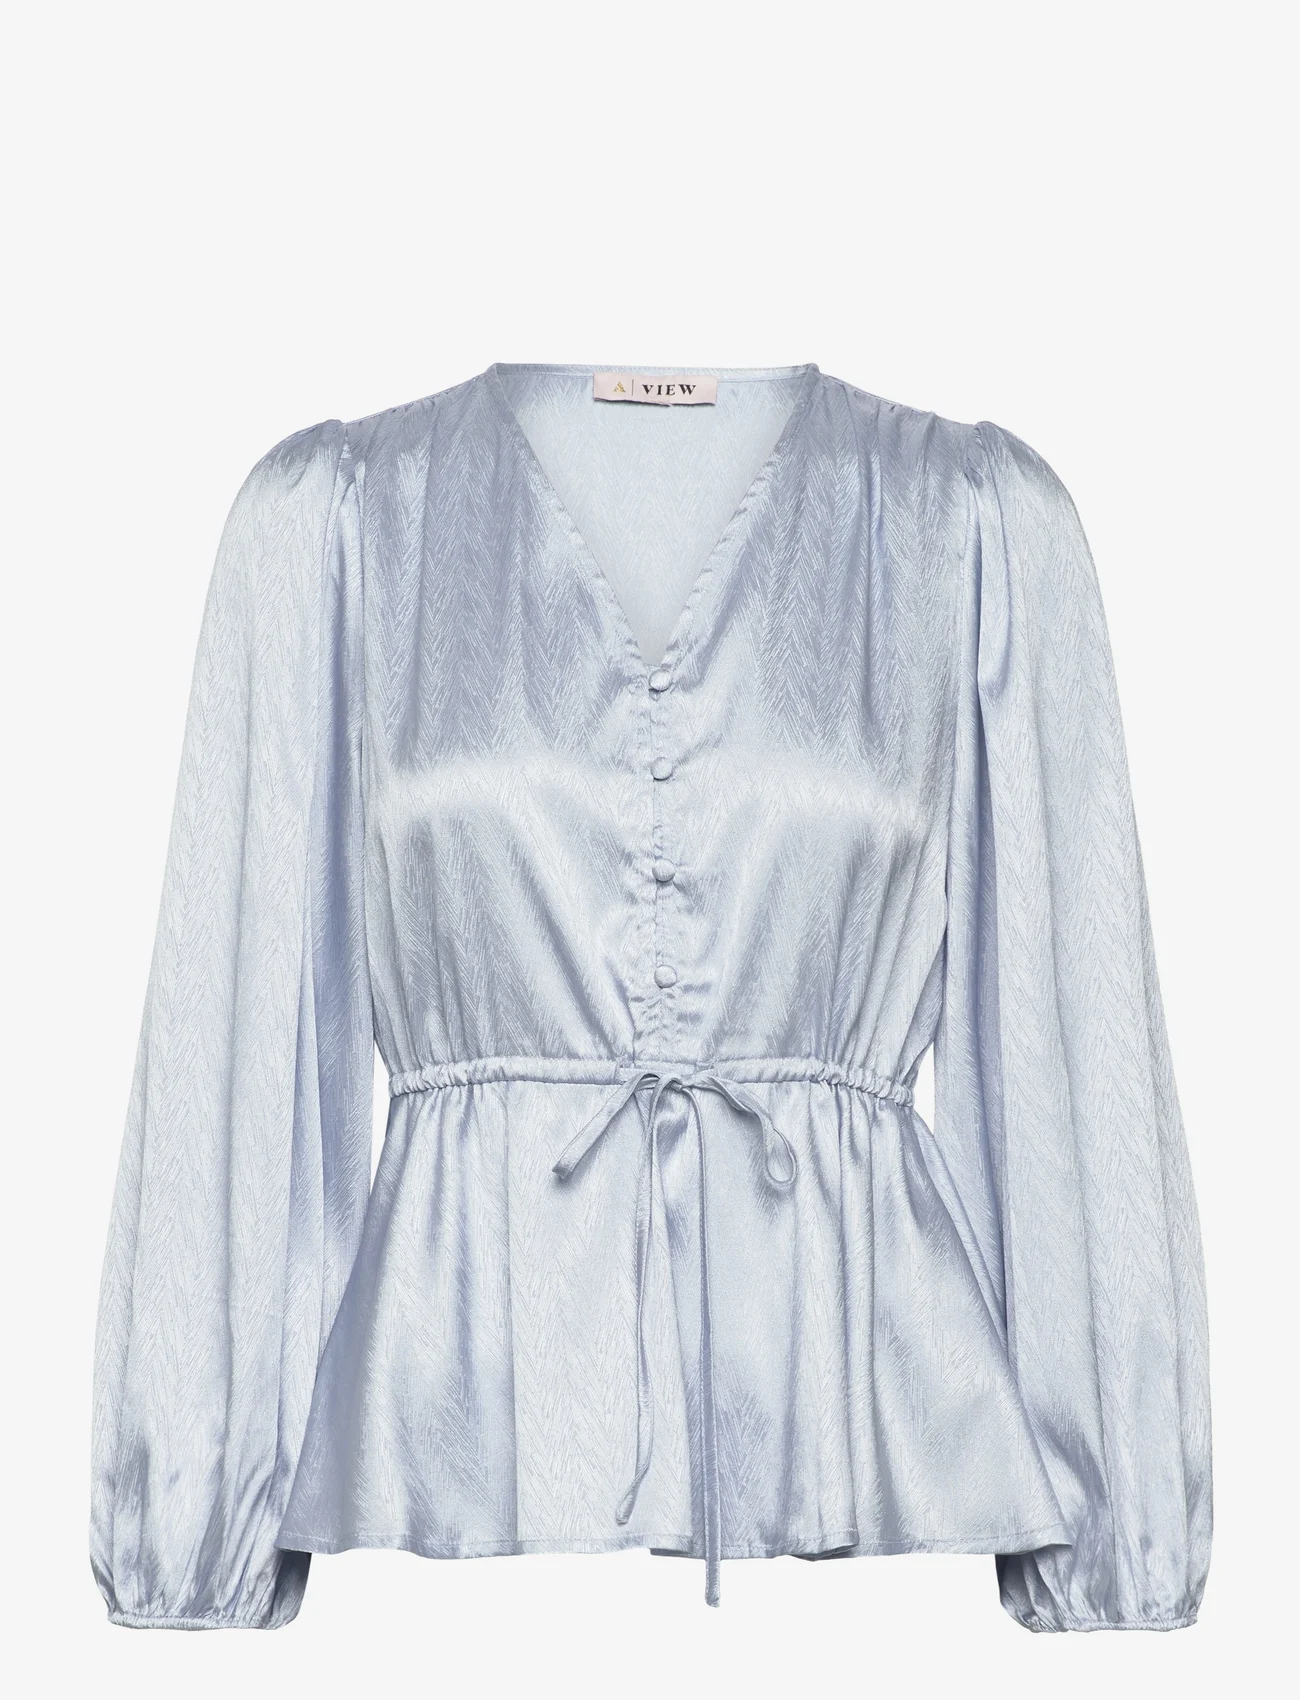 A-View - Luna blouse - langærmede bluser - light blue - 0